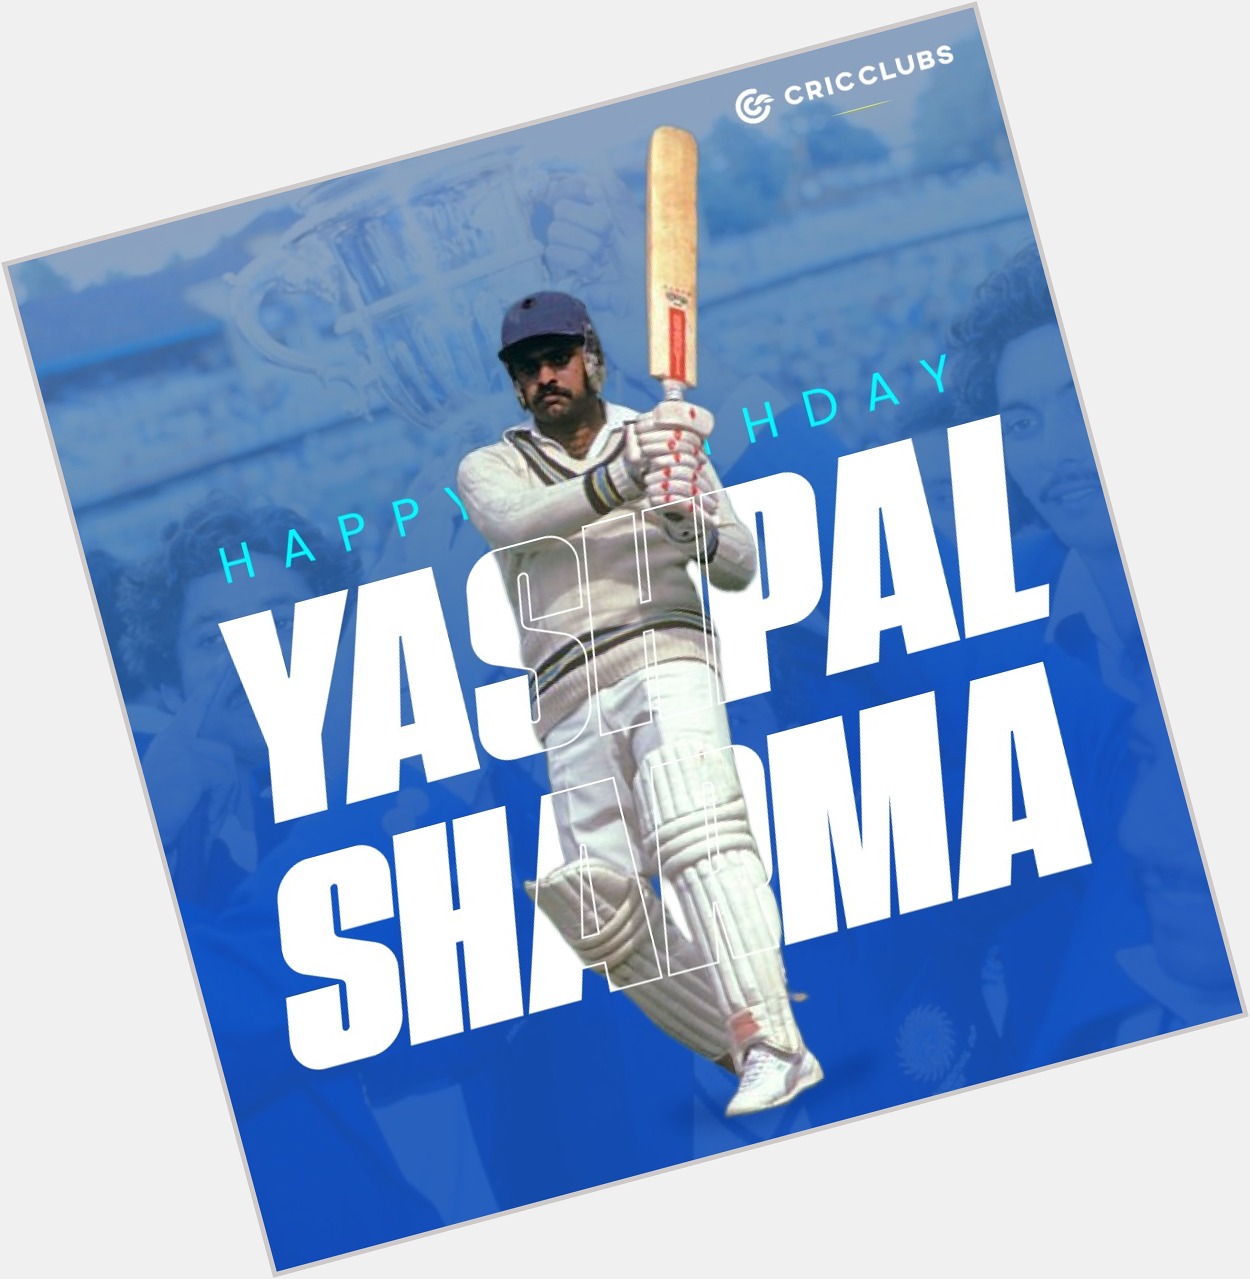   Happy Birthday to Former Indian Cricketer Yashpal Sharma!    